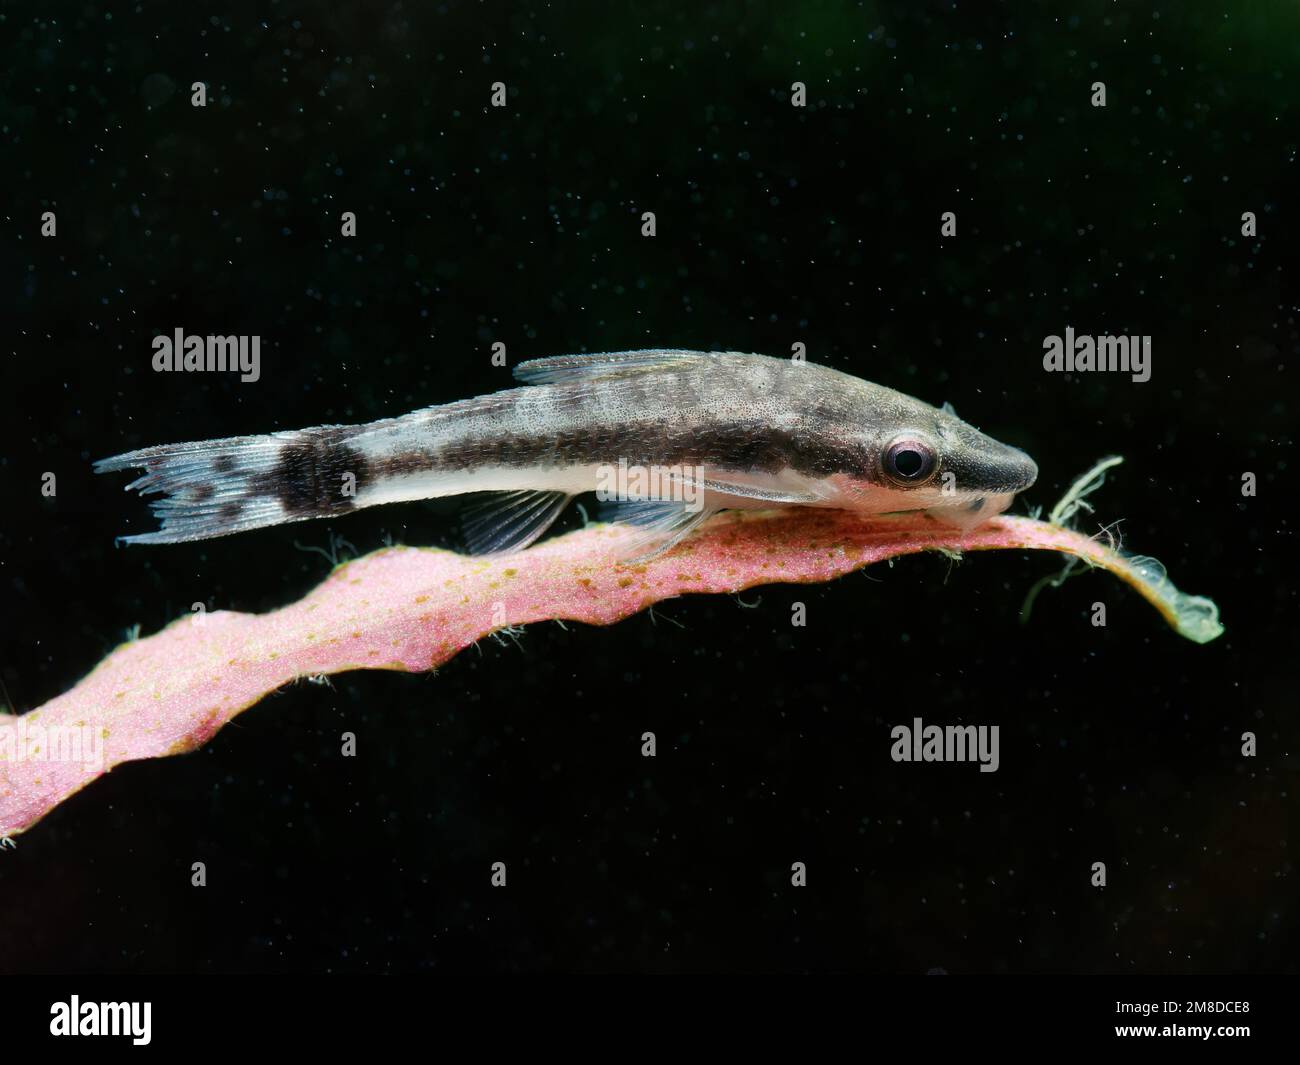 e Otocinclus catfish on pink cryptocoryne leaves, isolated with dark background Stock Photo